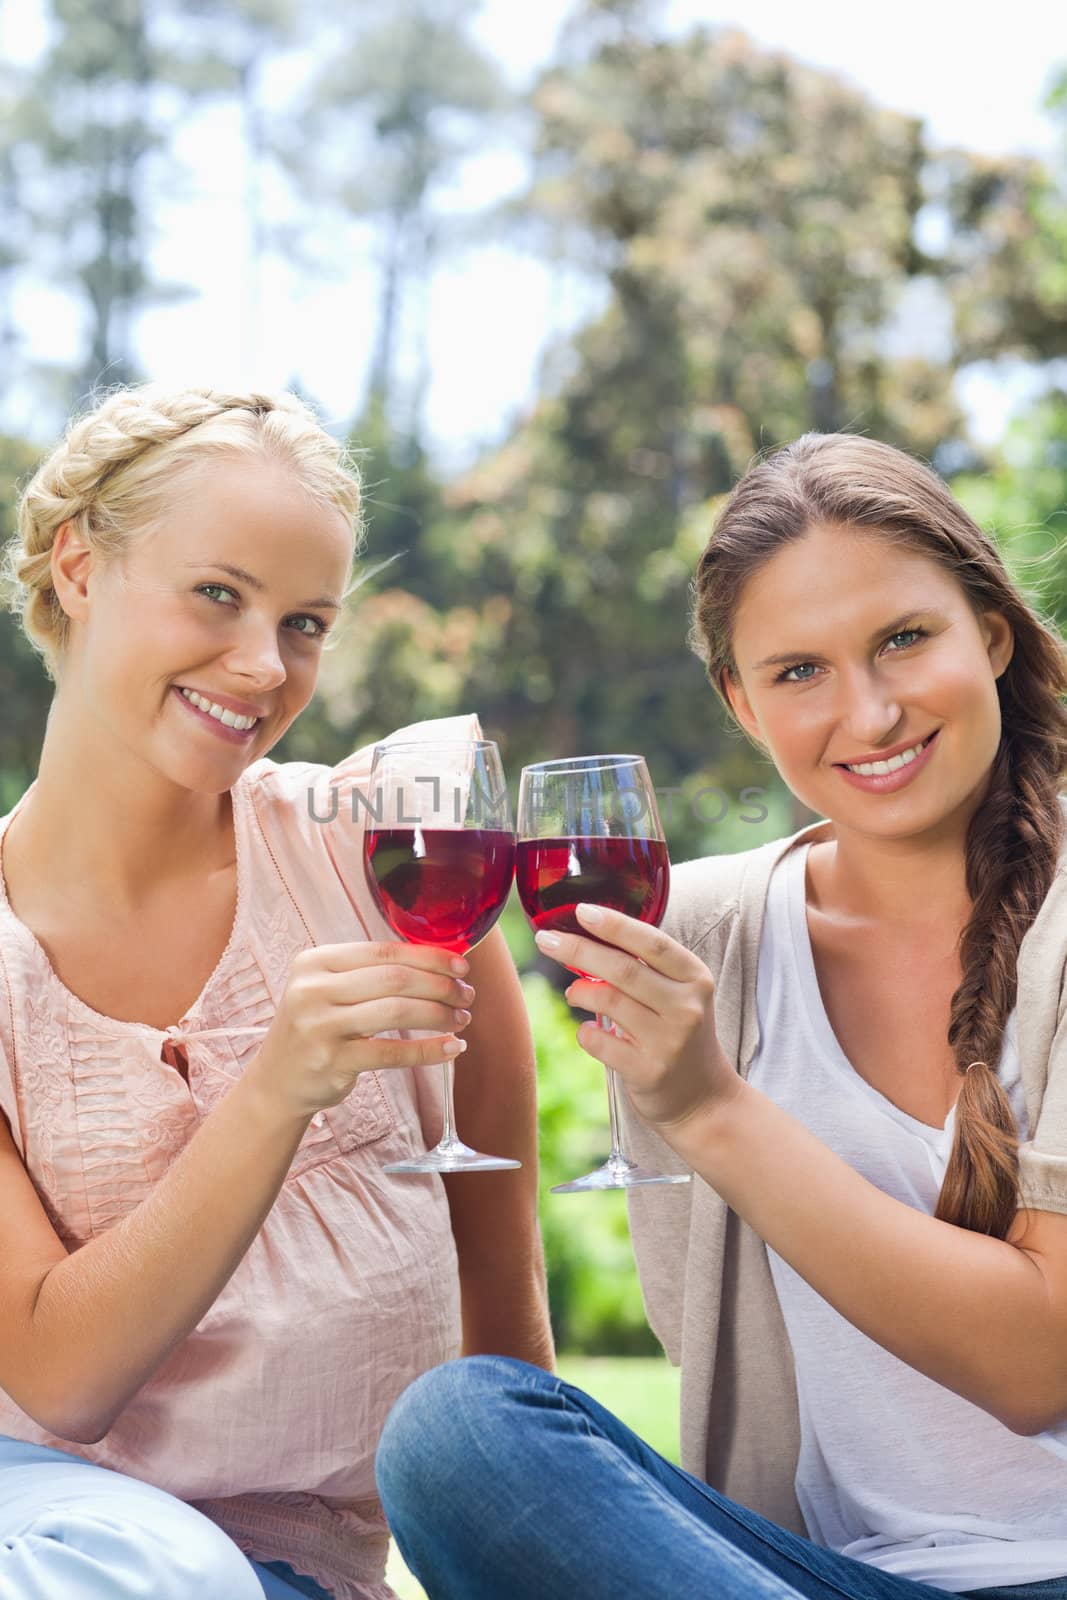 Smiling friends clinking wine glasses by Wavebreakmedia